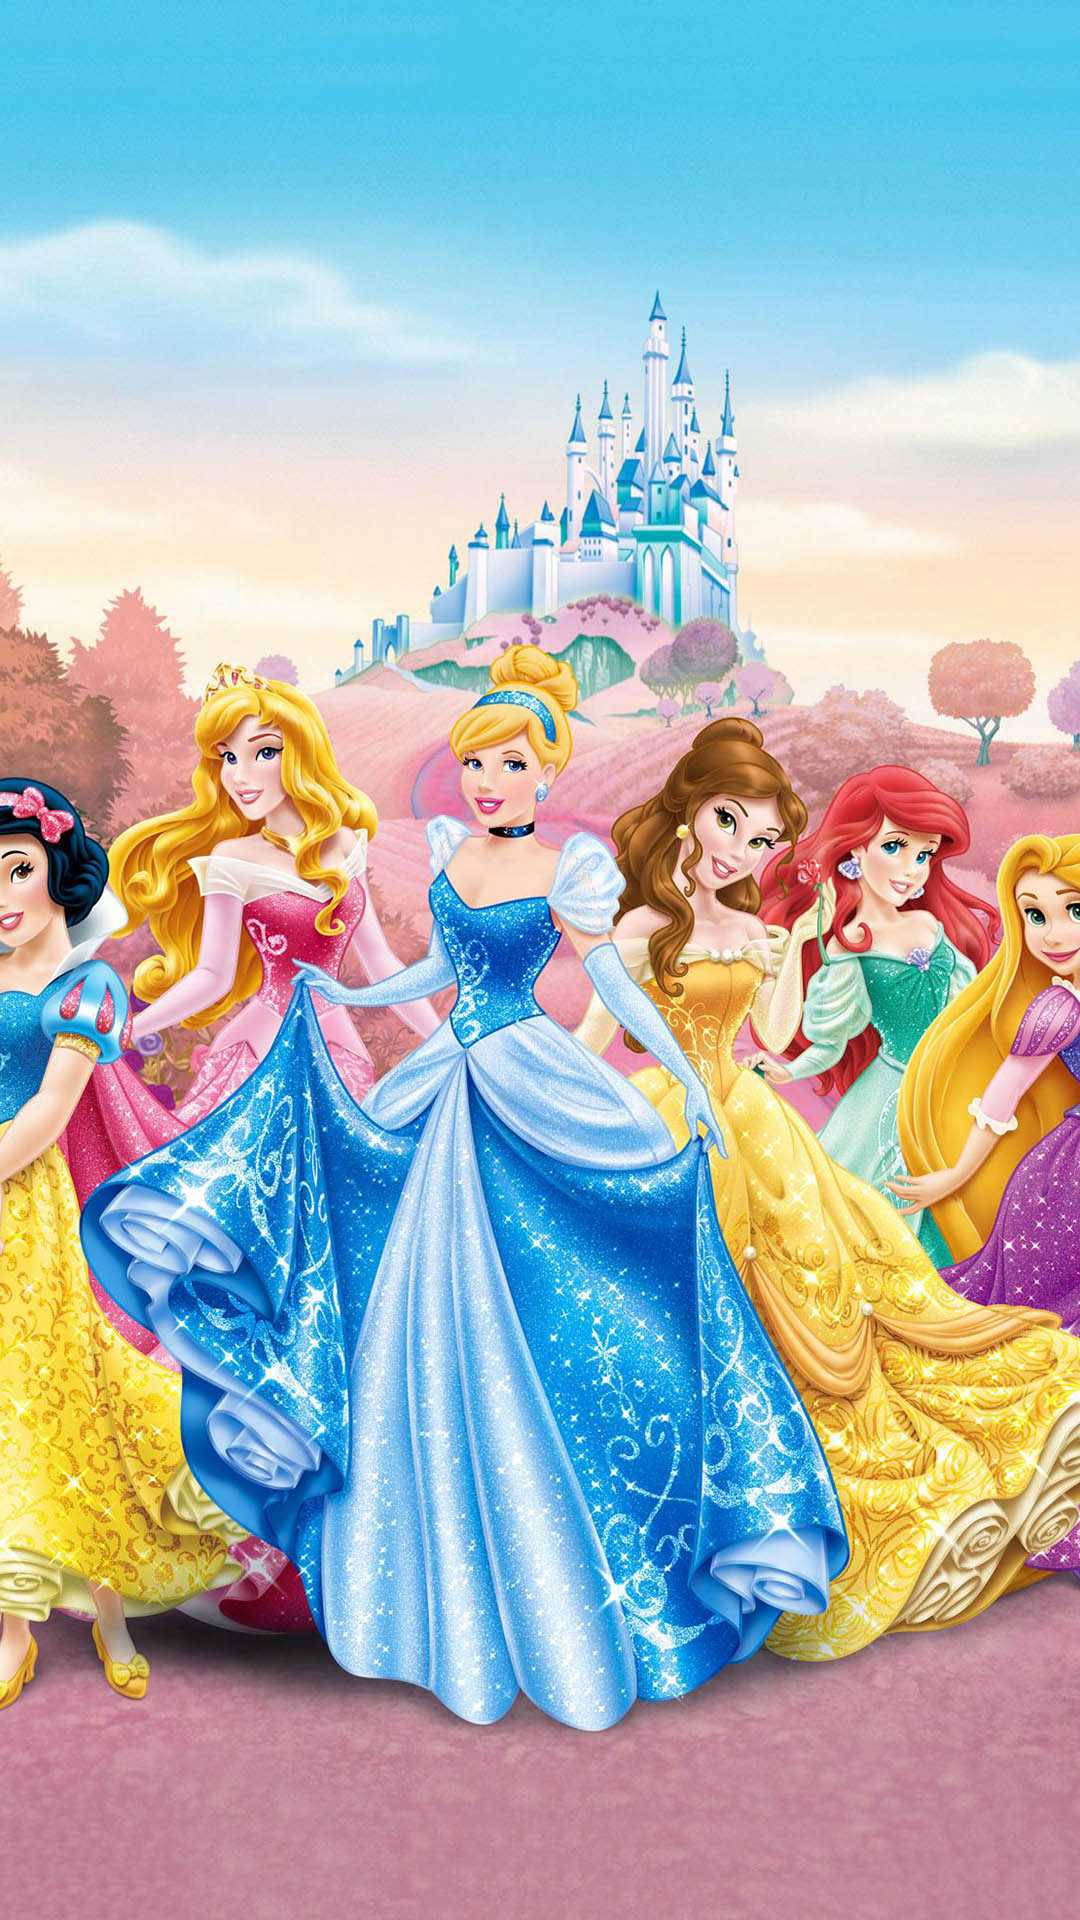 Disney Princess Premium wall murals  Buy it now